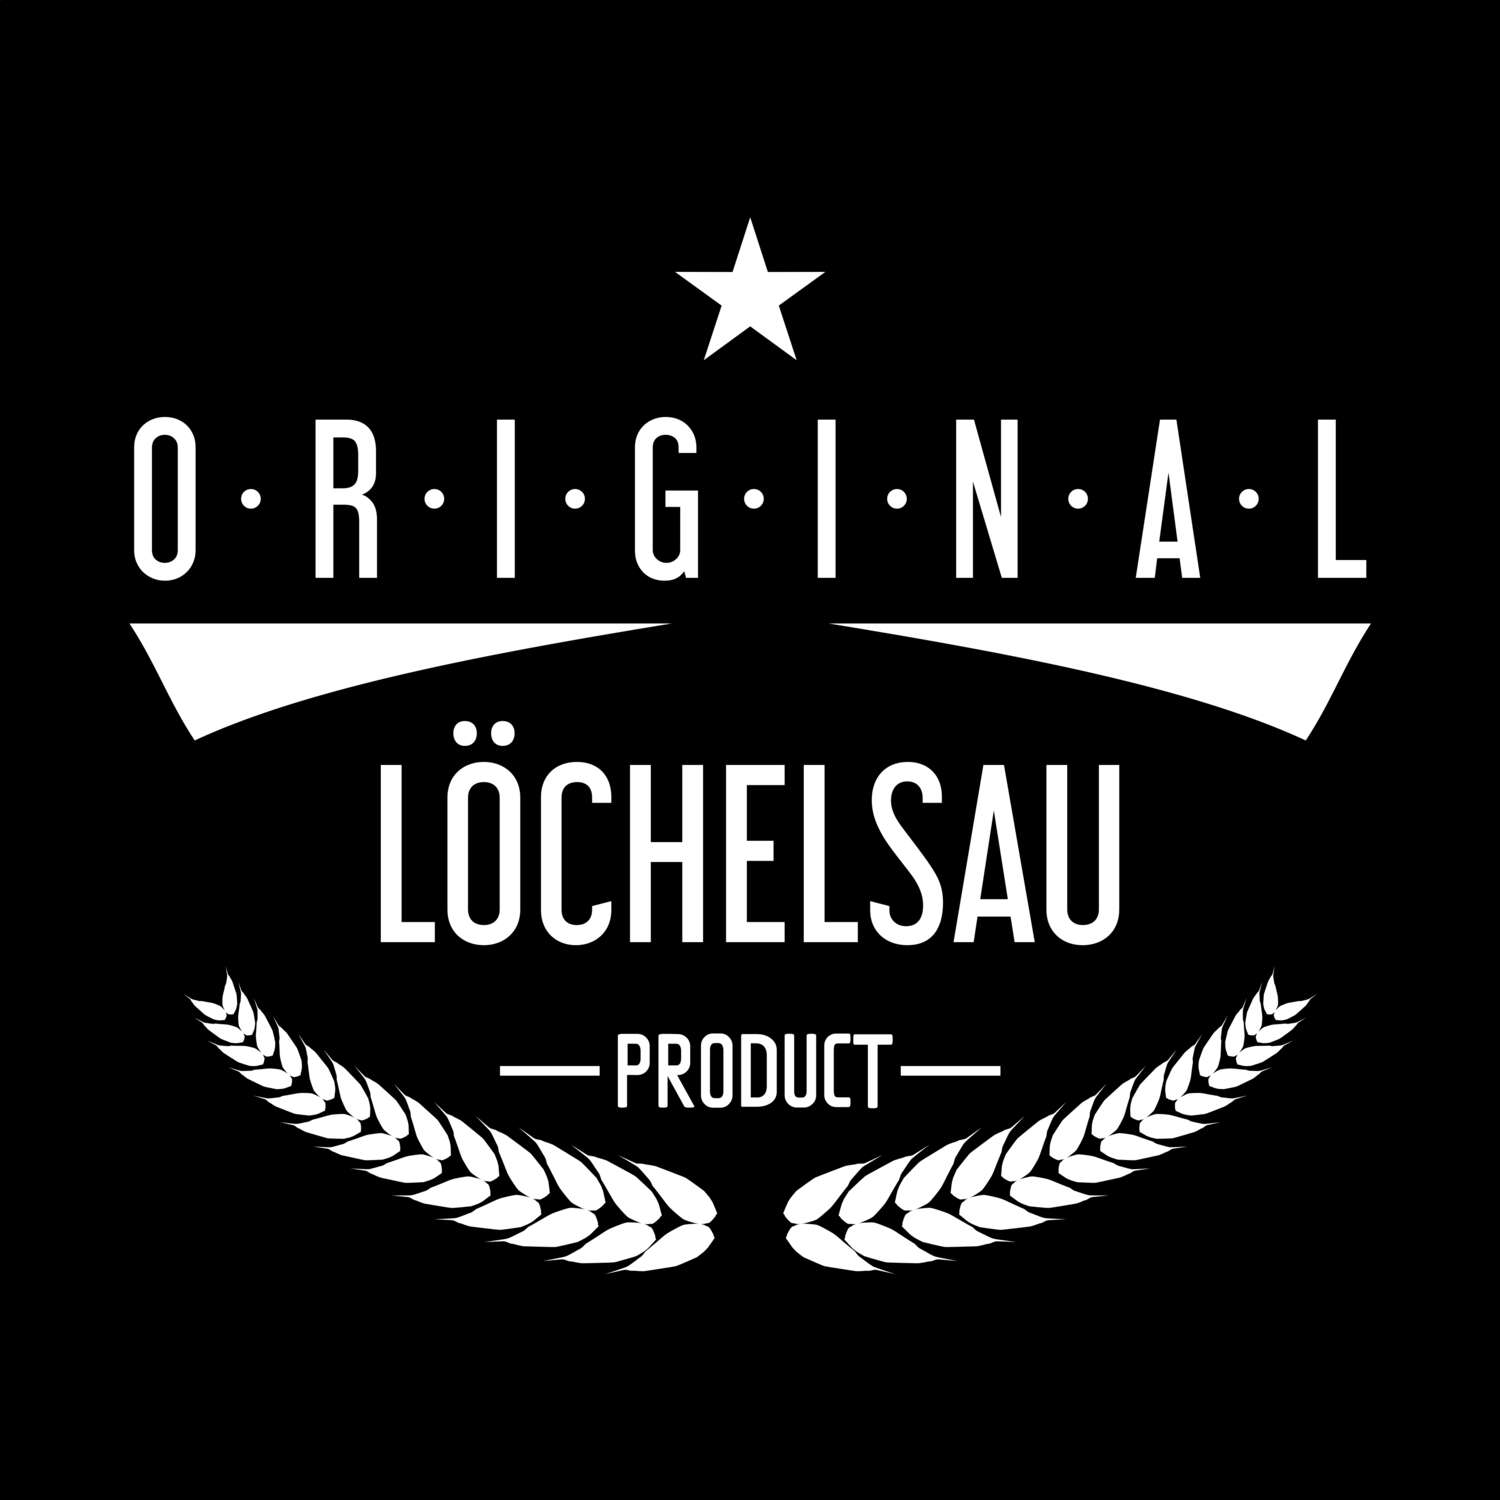 Löchelsau T-Shirt »Original Product«